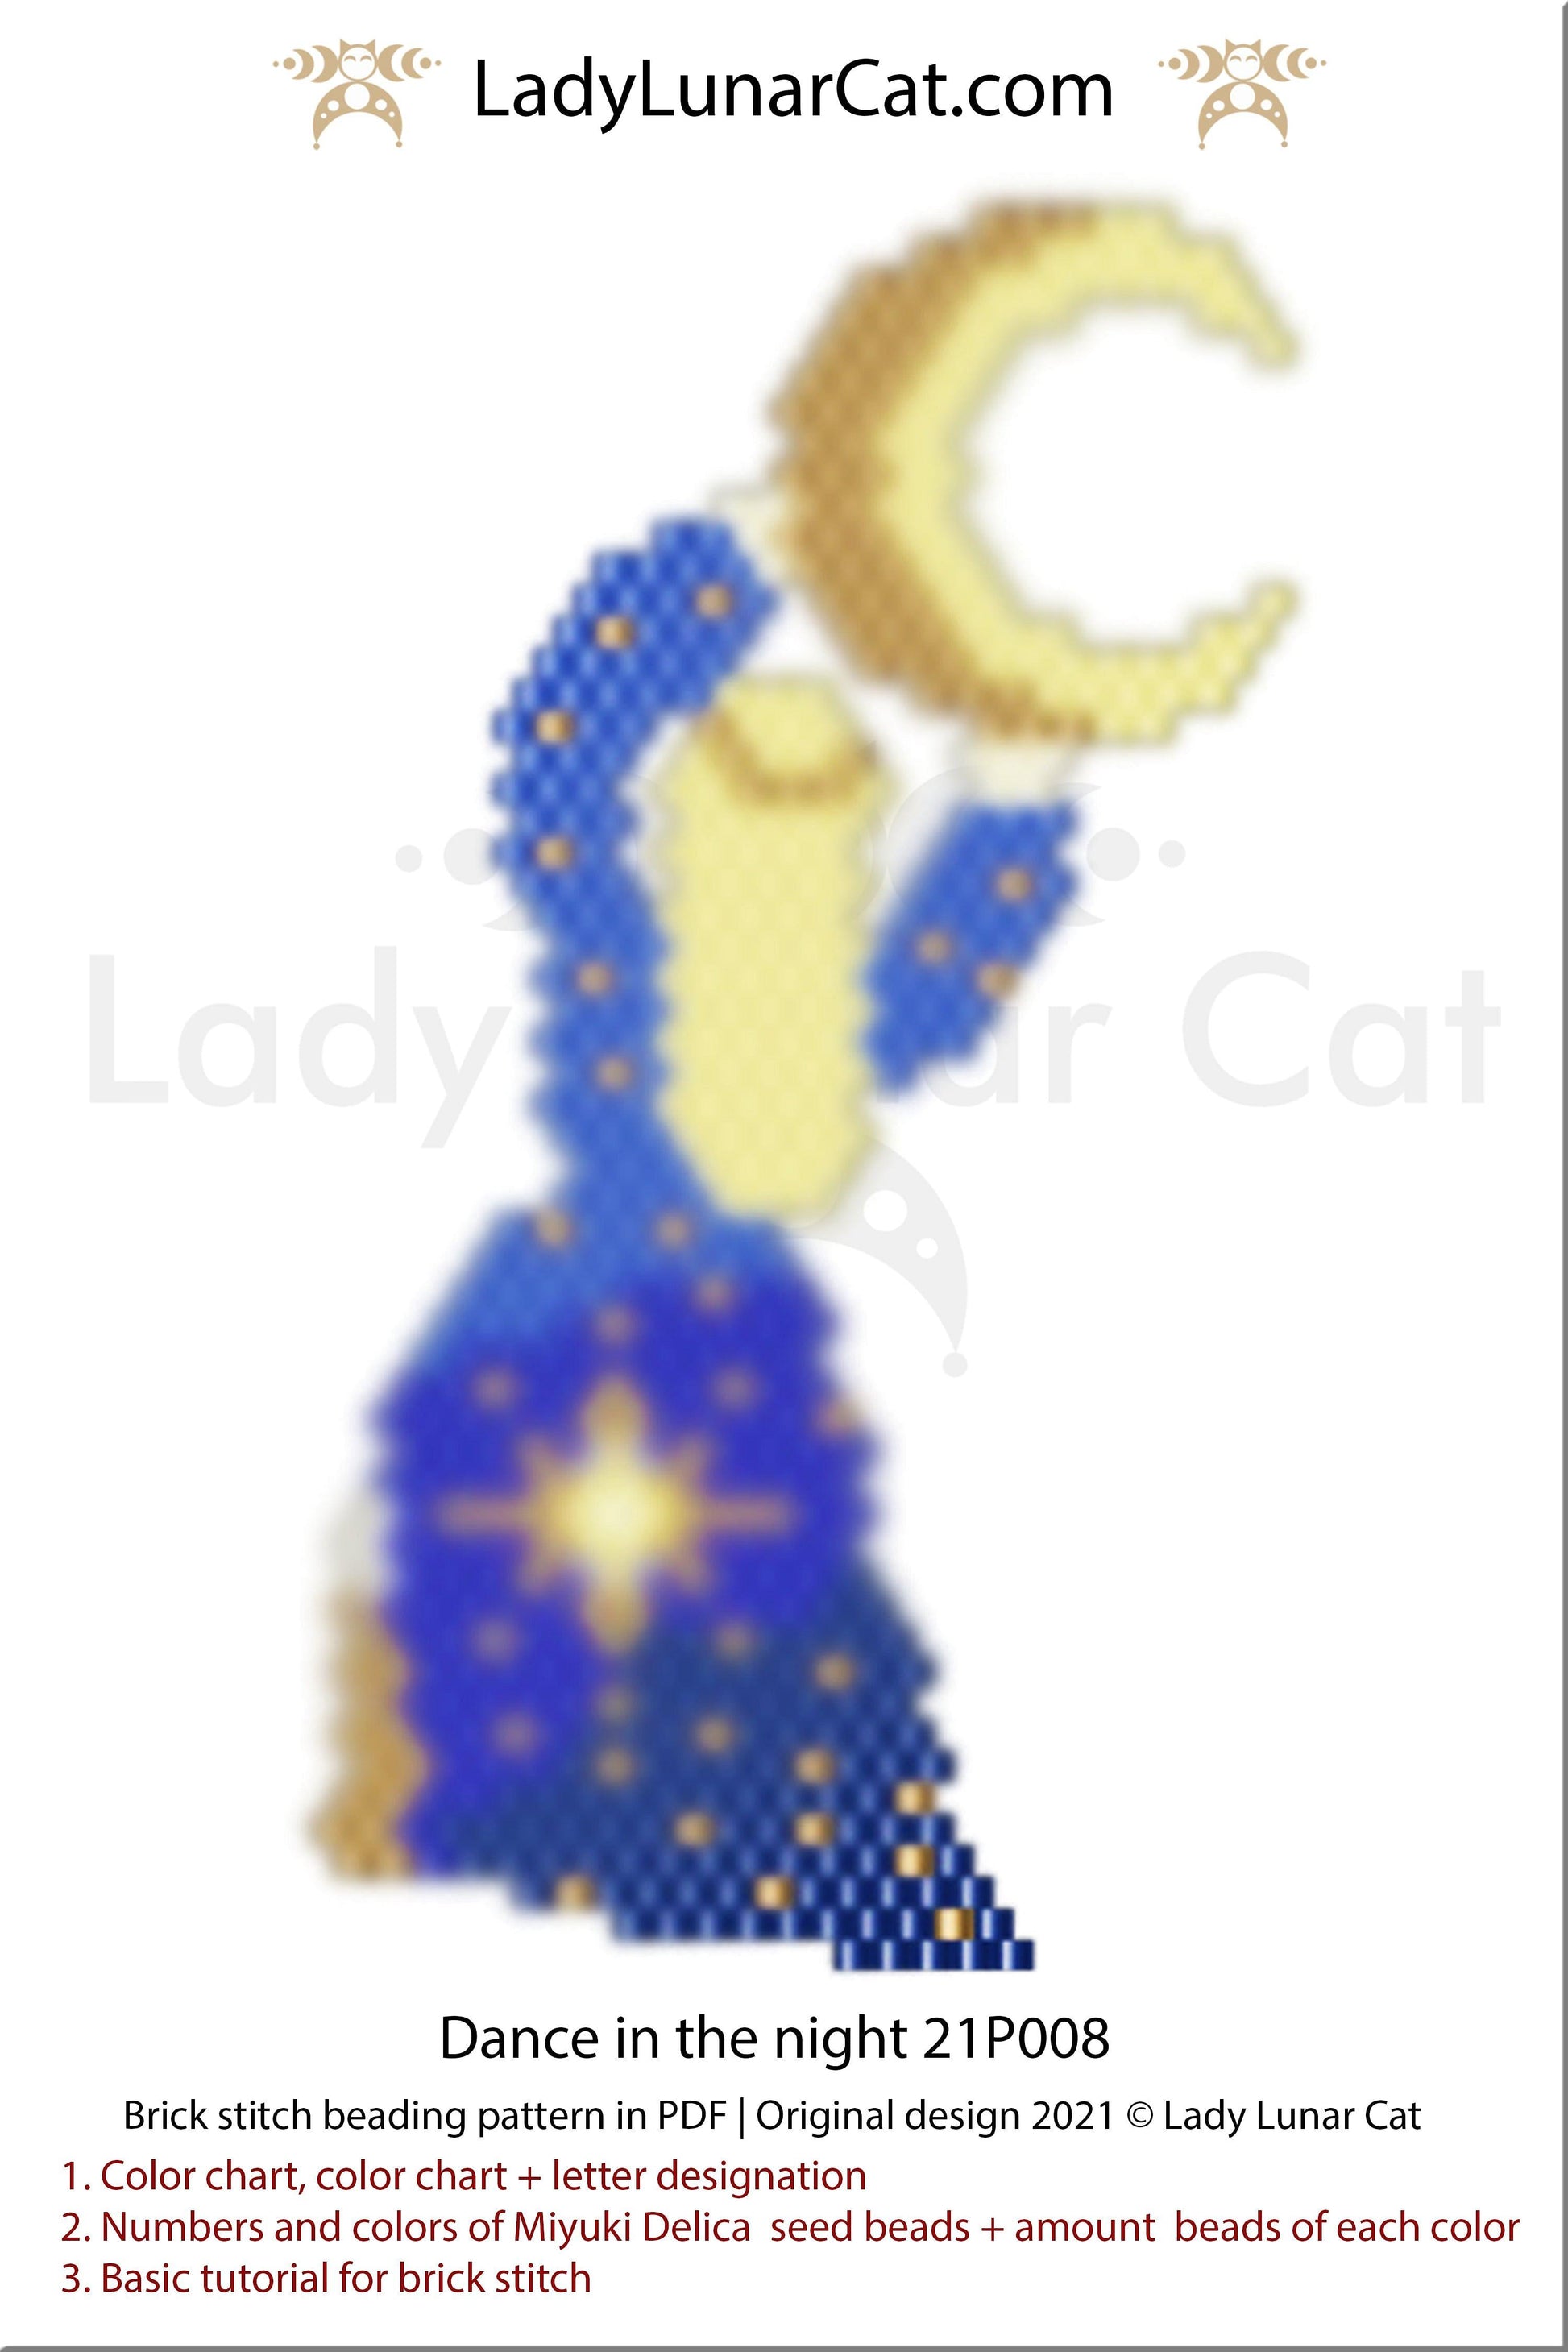 Brick stitch pattern for beading Dance in the night 21P008 LadyLunarCat